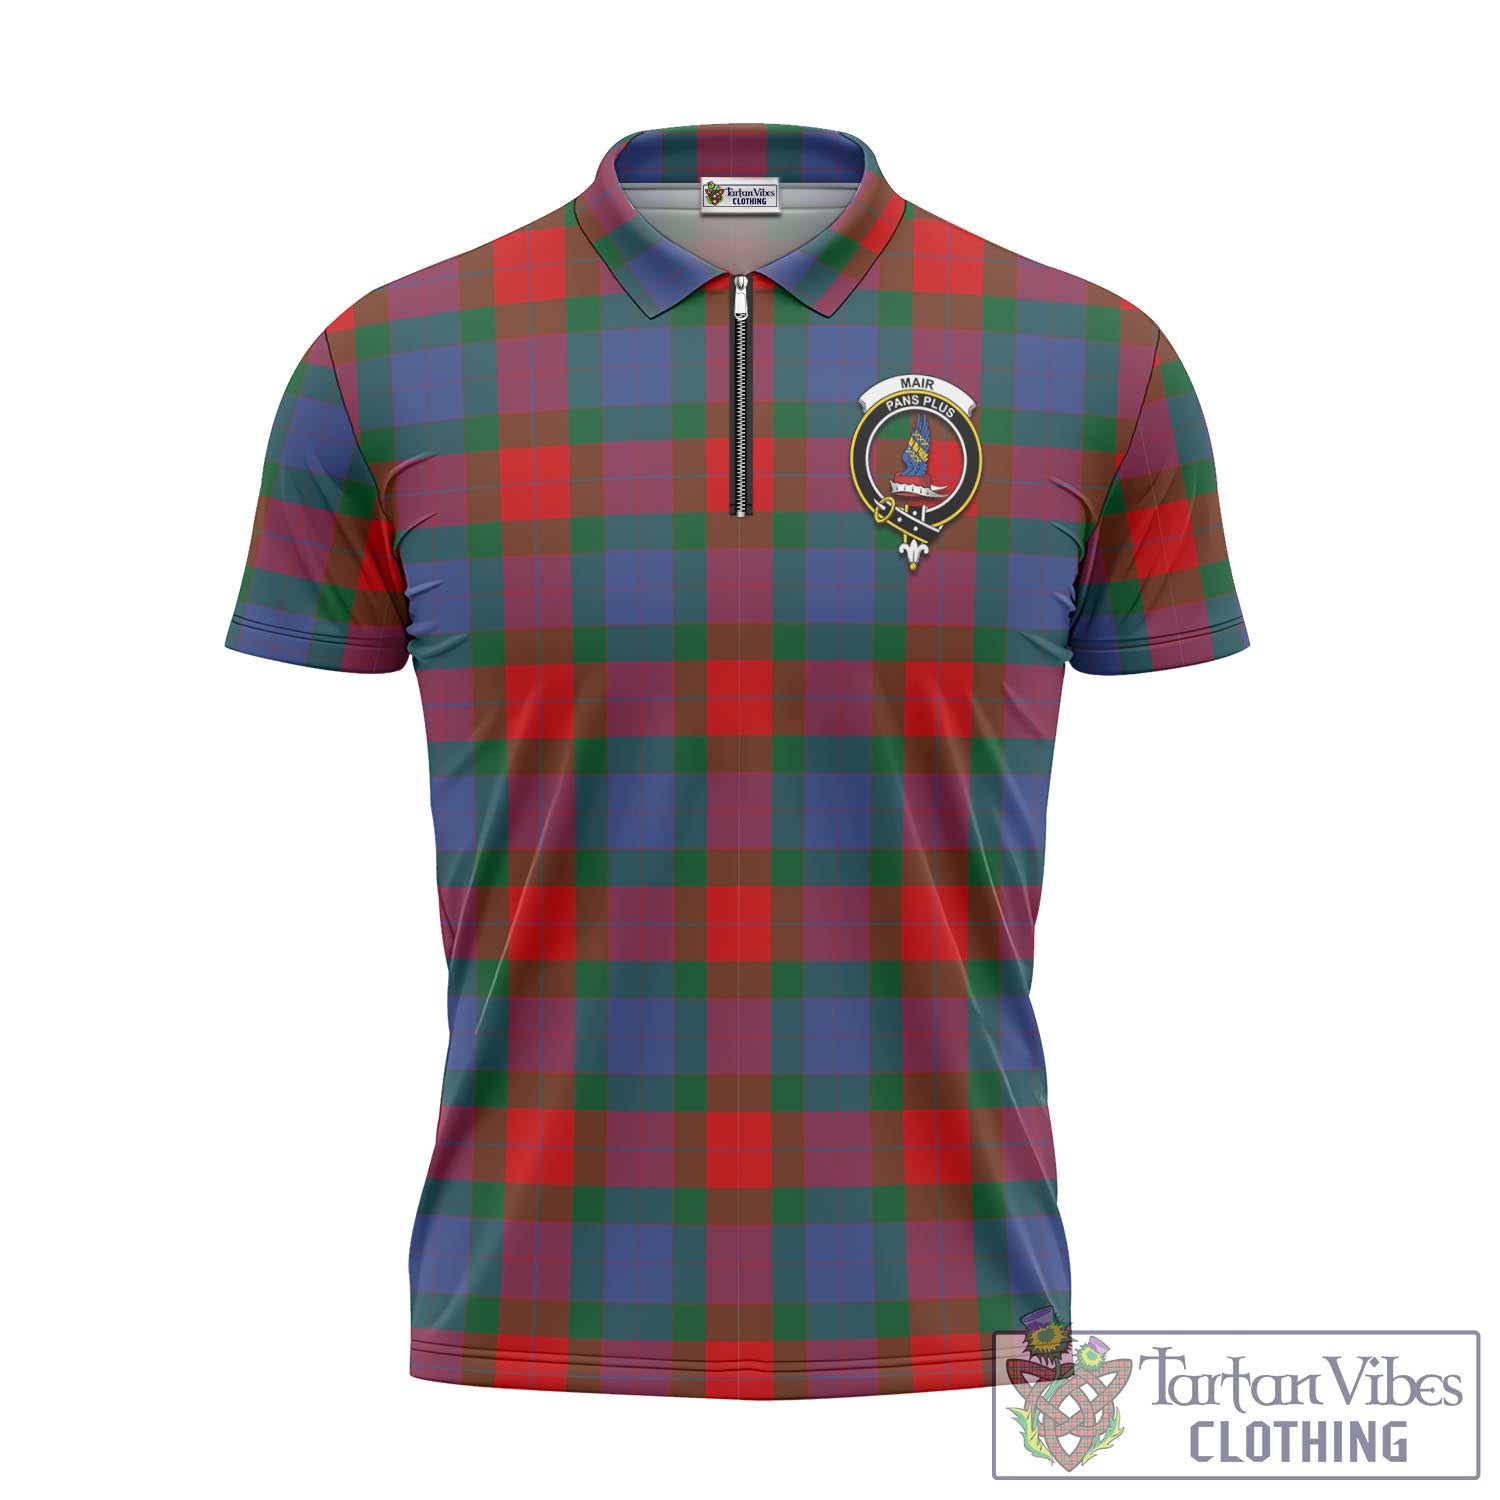 Tartan Vibes Clothing Mar Tartan Zipper Polo Shirt with Family Crest